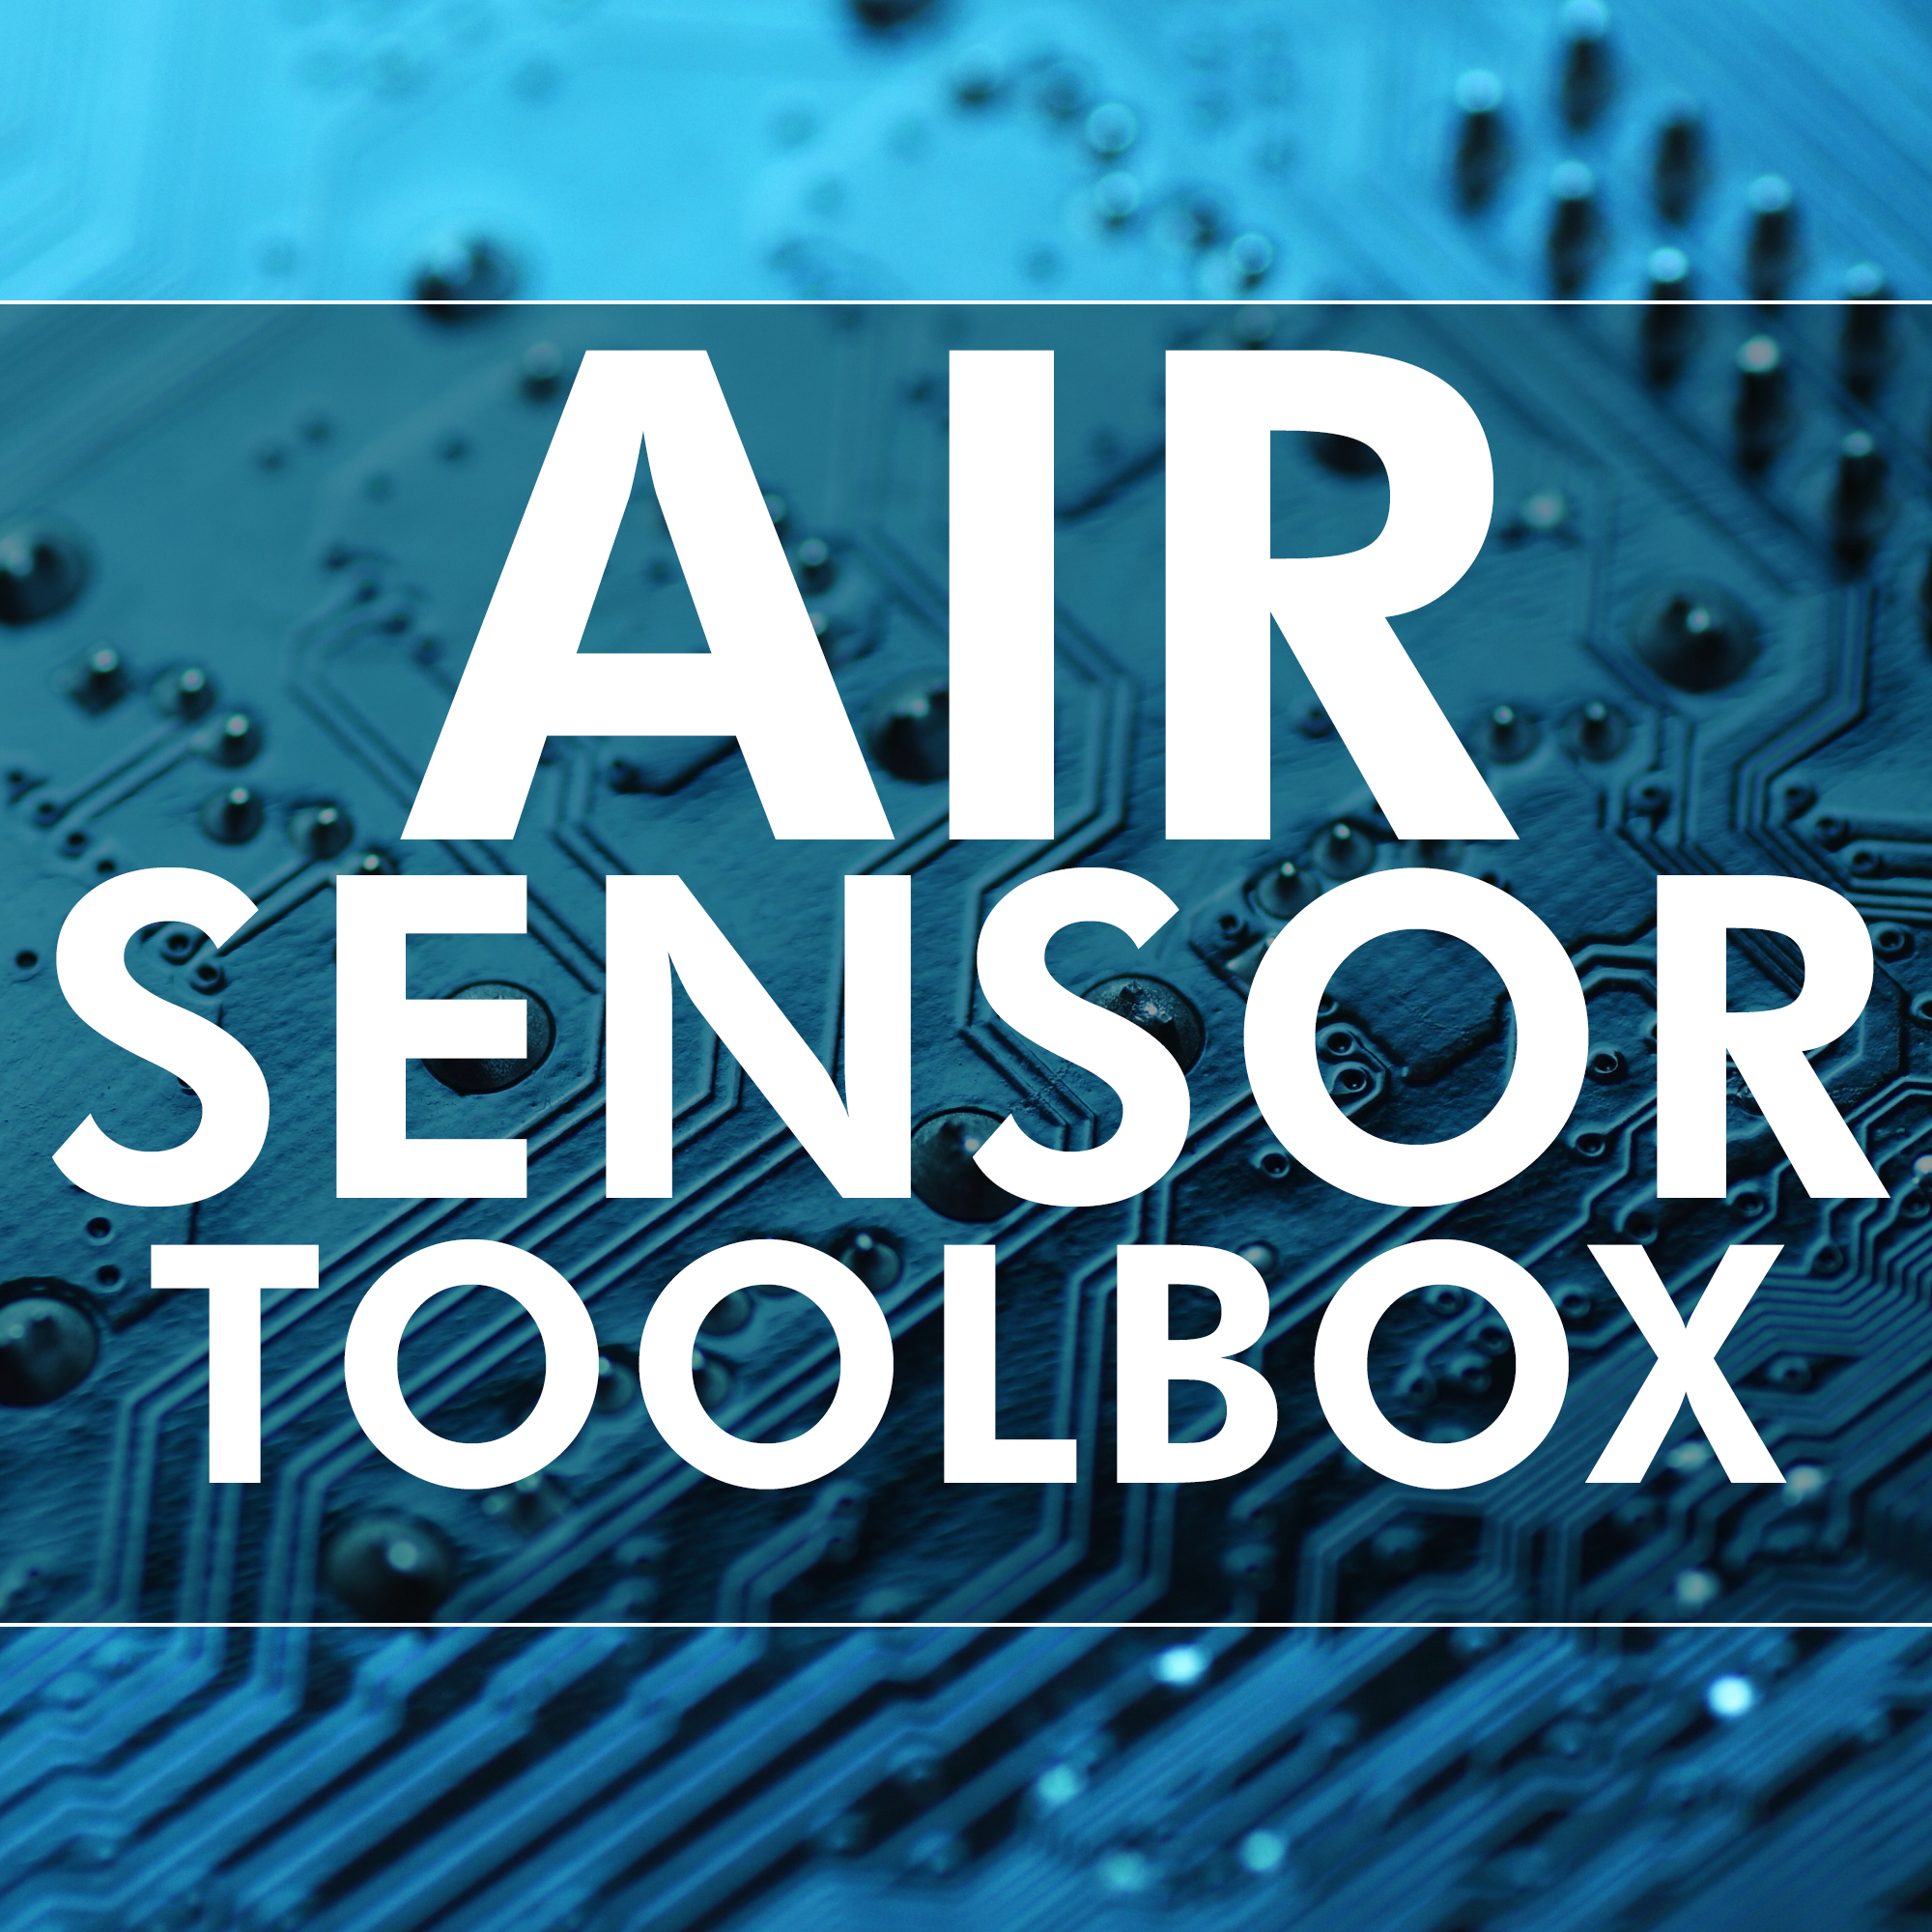 EPA Air Sensor Logo. “Citizen Science Toolbox” with EPA seal. Motto: Measure, Learn, Share